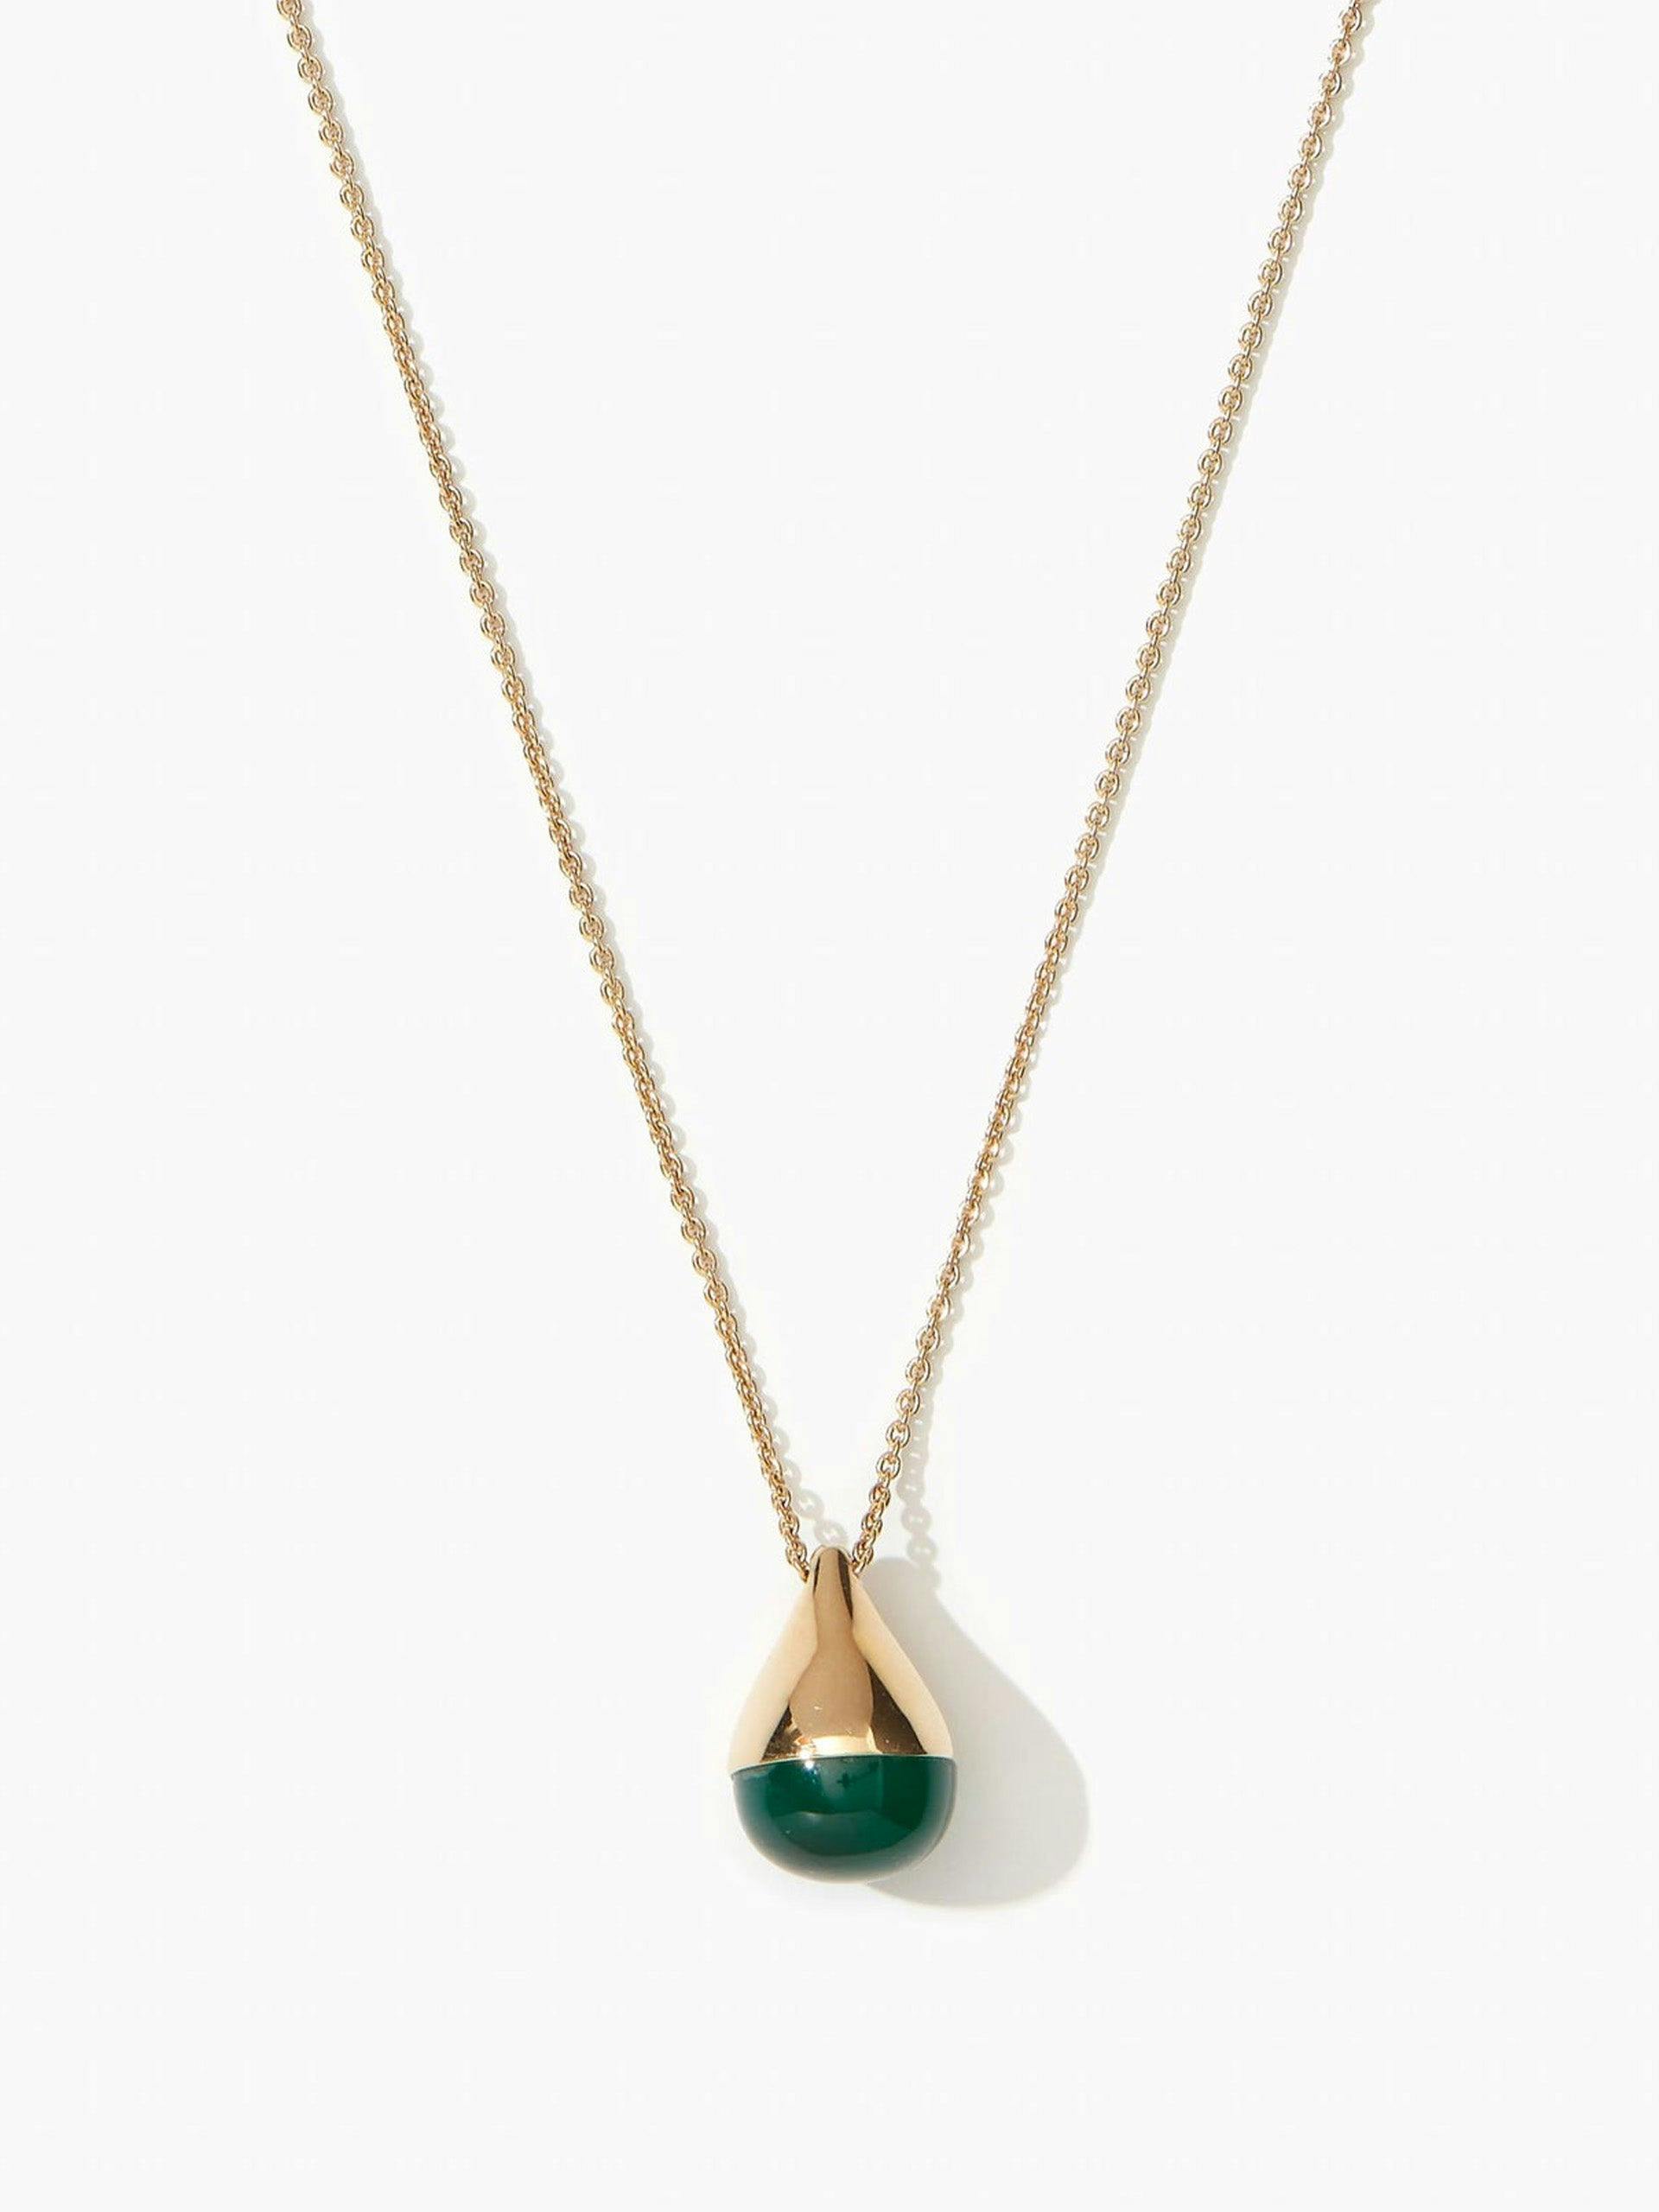 Stilla green onyx necklace